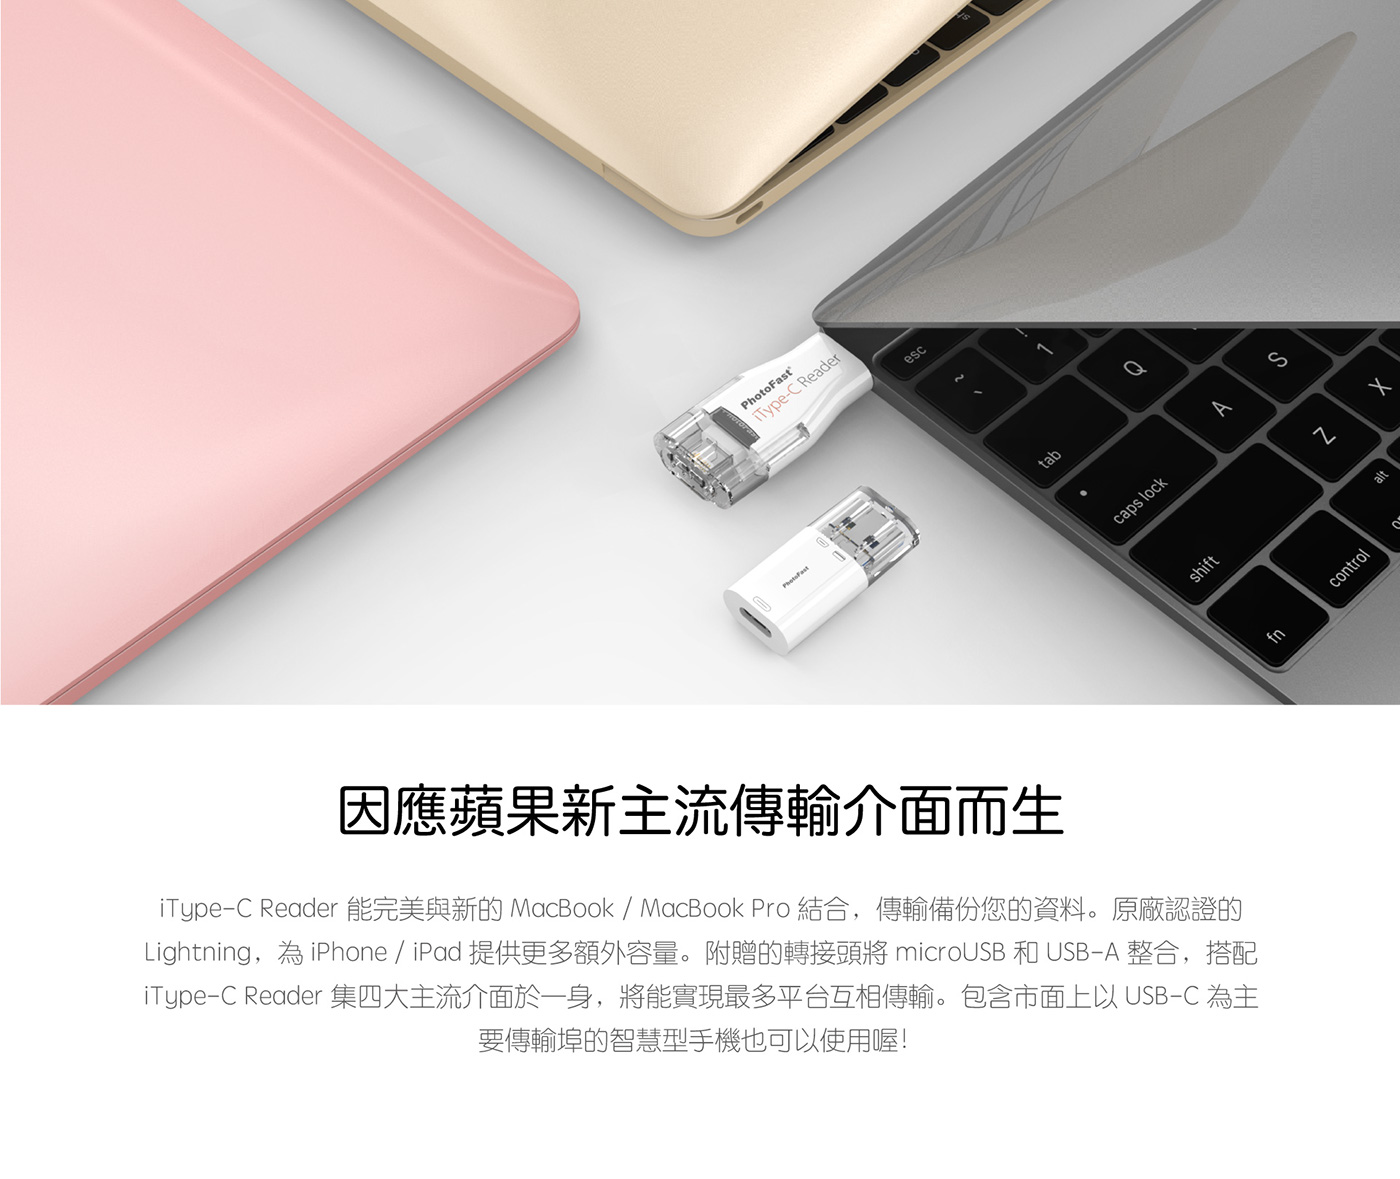 Web product iphone Type-C tech card reader apple design iPhone x macbook